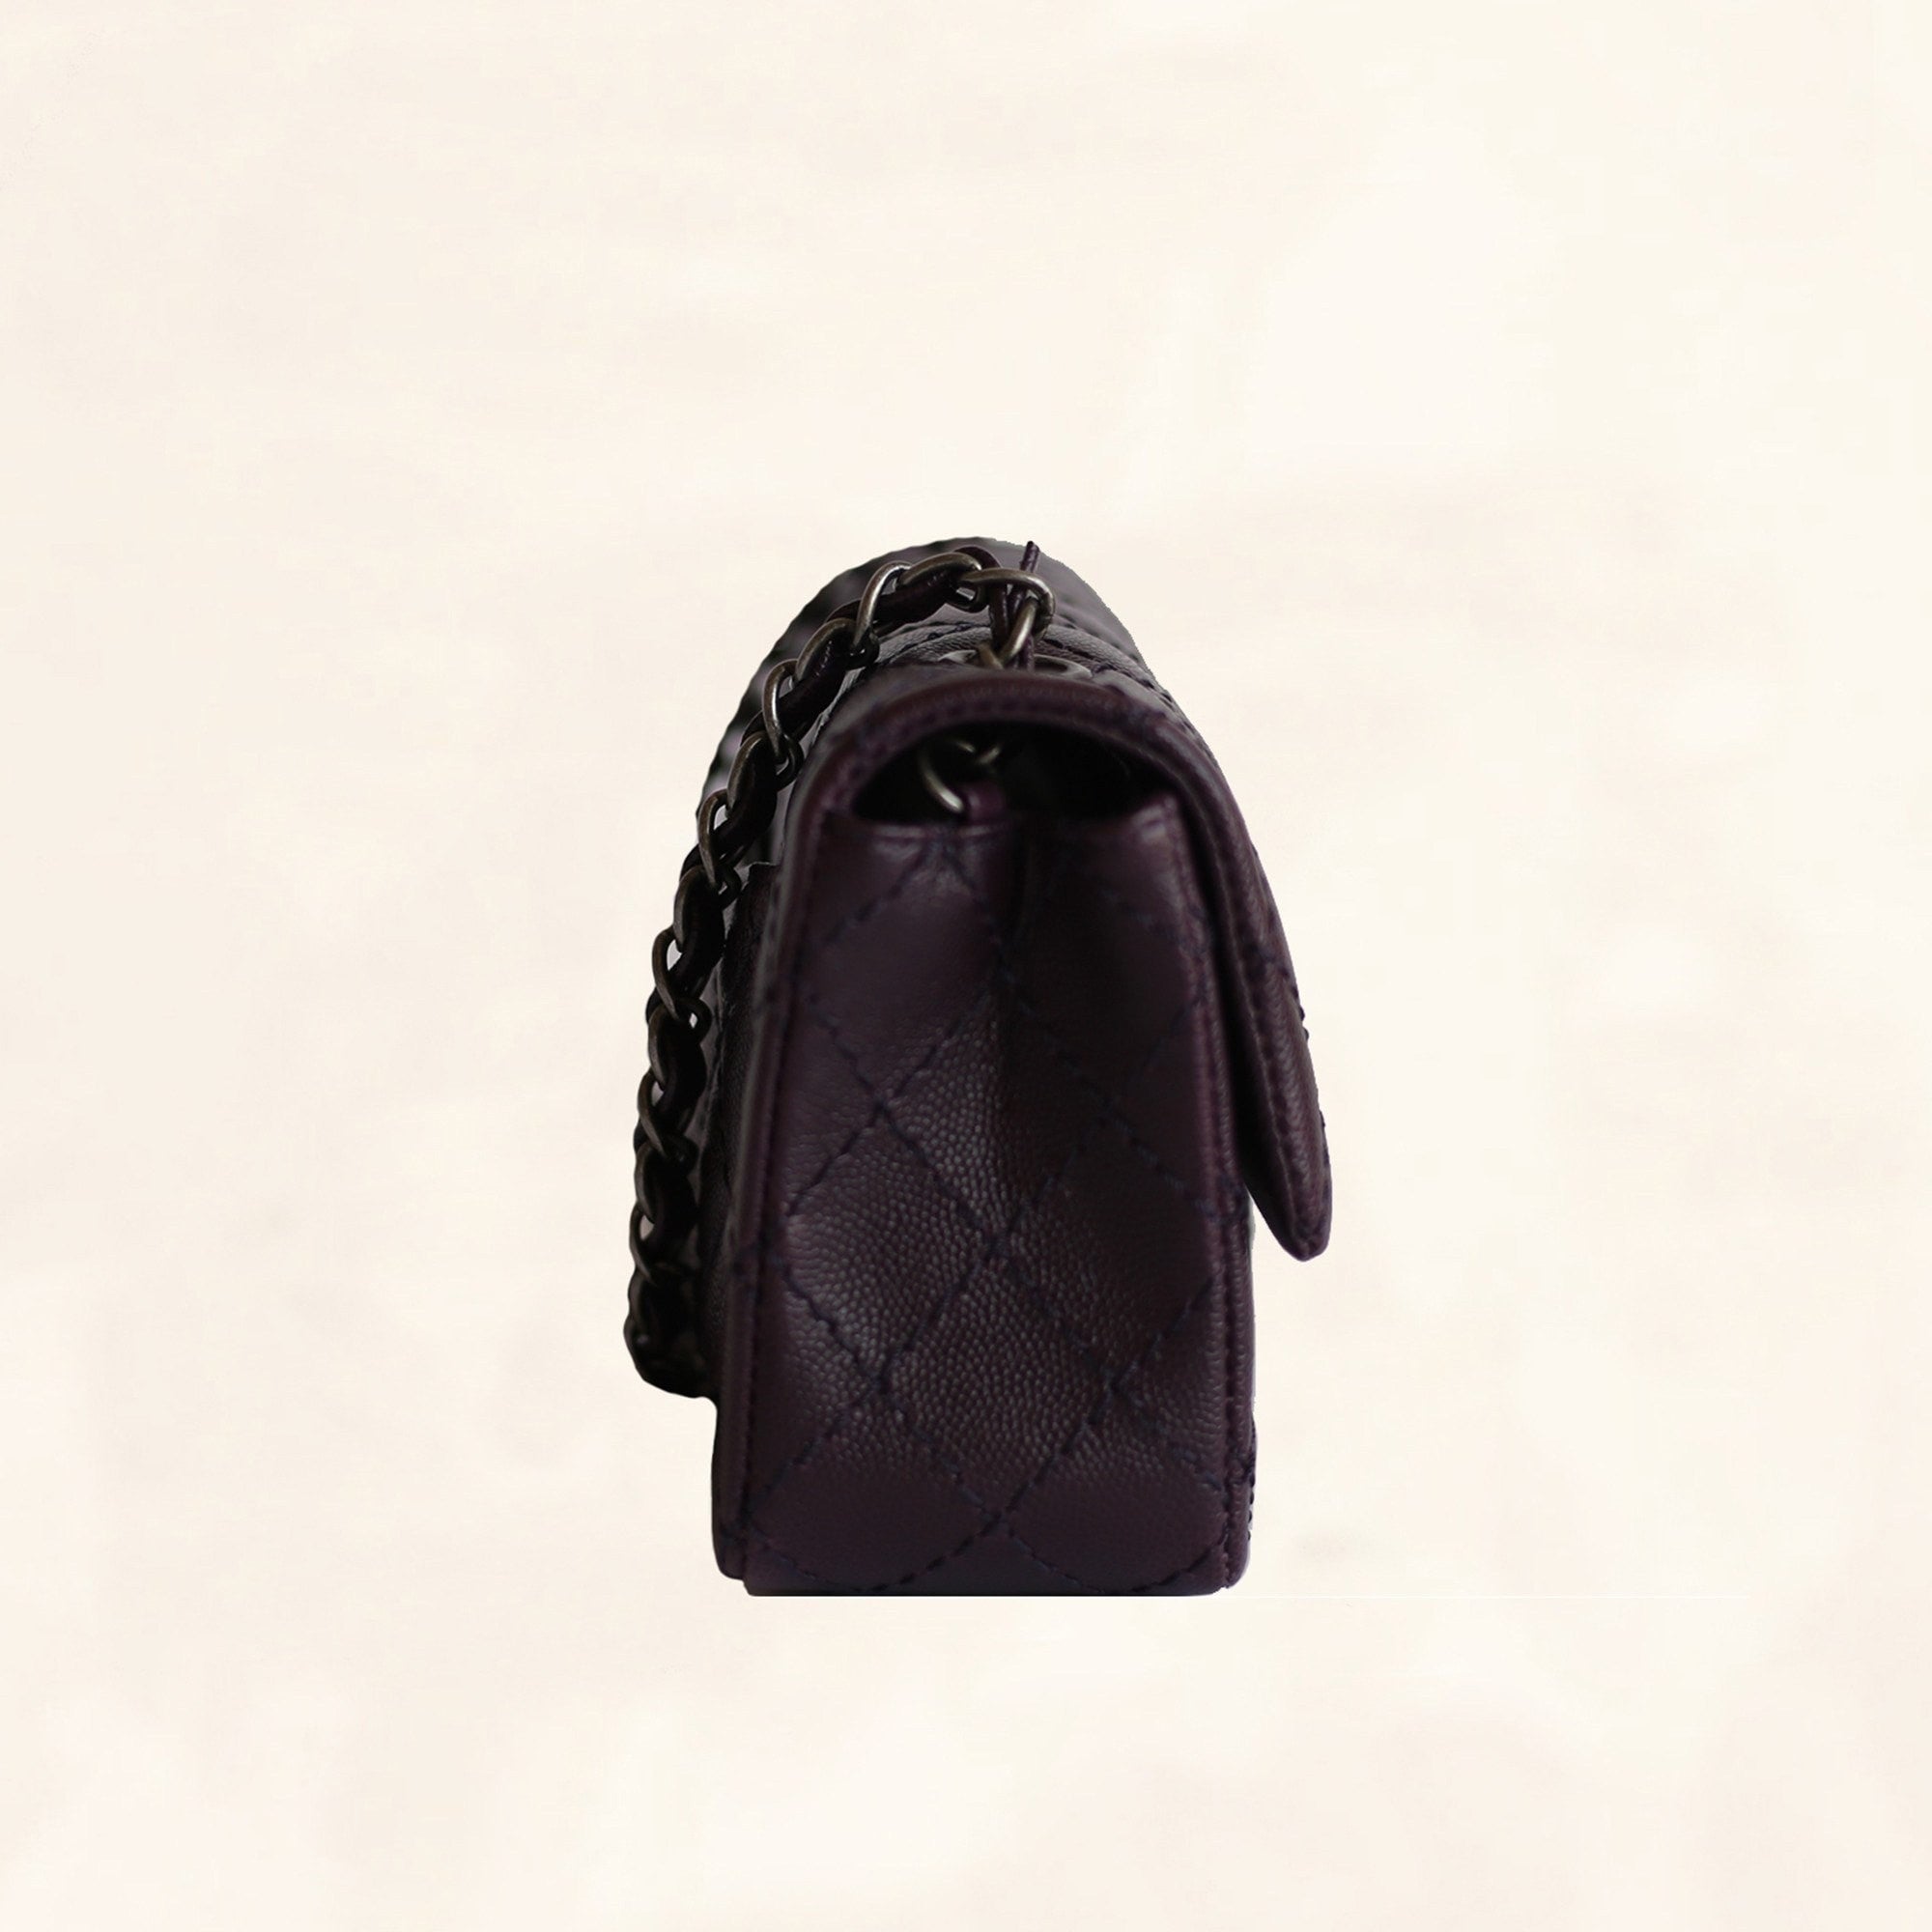 purple mini chanel bag authentic